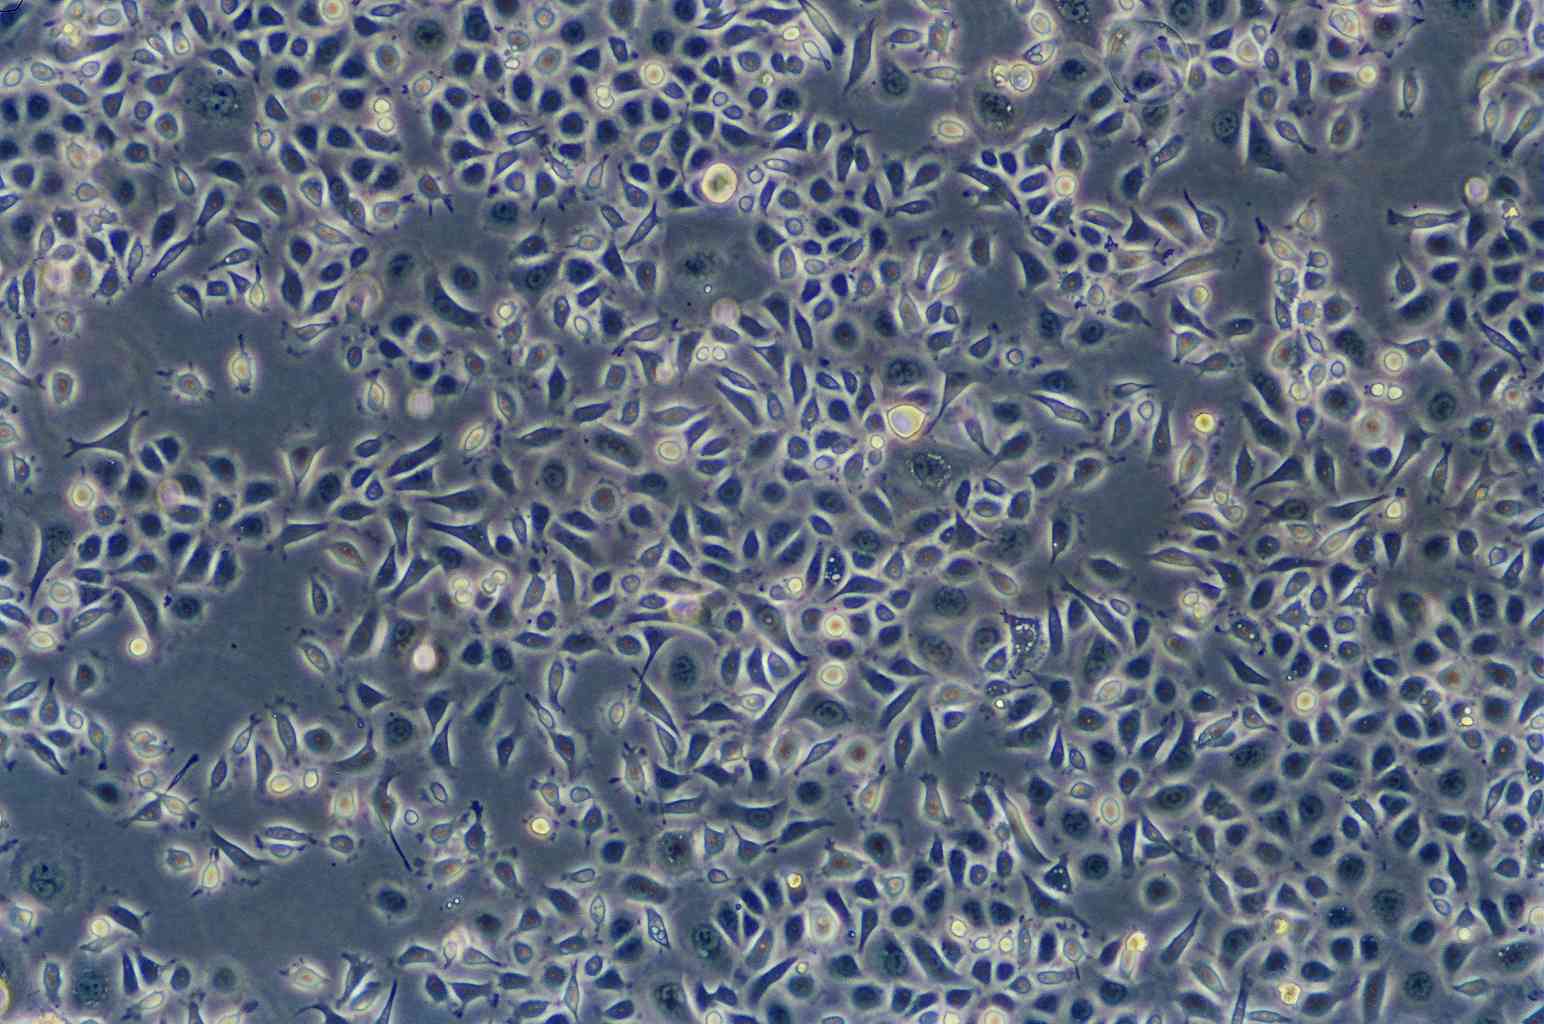 FD-LSC-1 epithelioid cells人喉鳞癌细胞系,FD-LSC-1 epithelioid cells